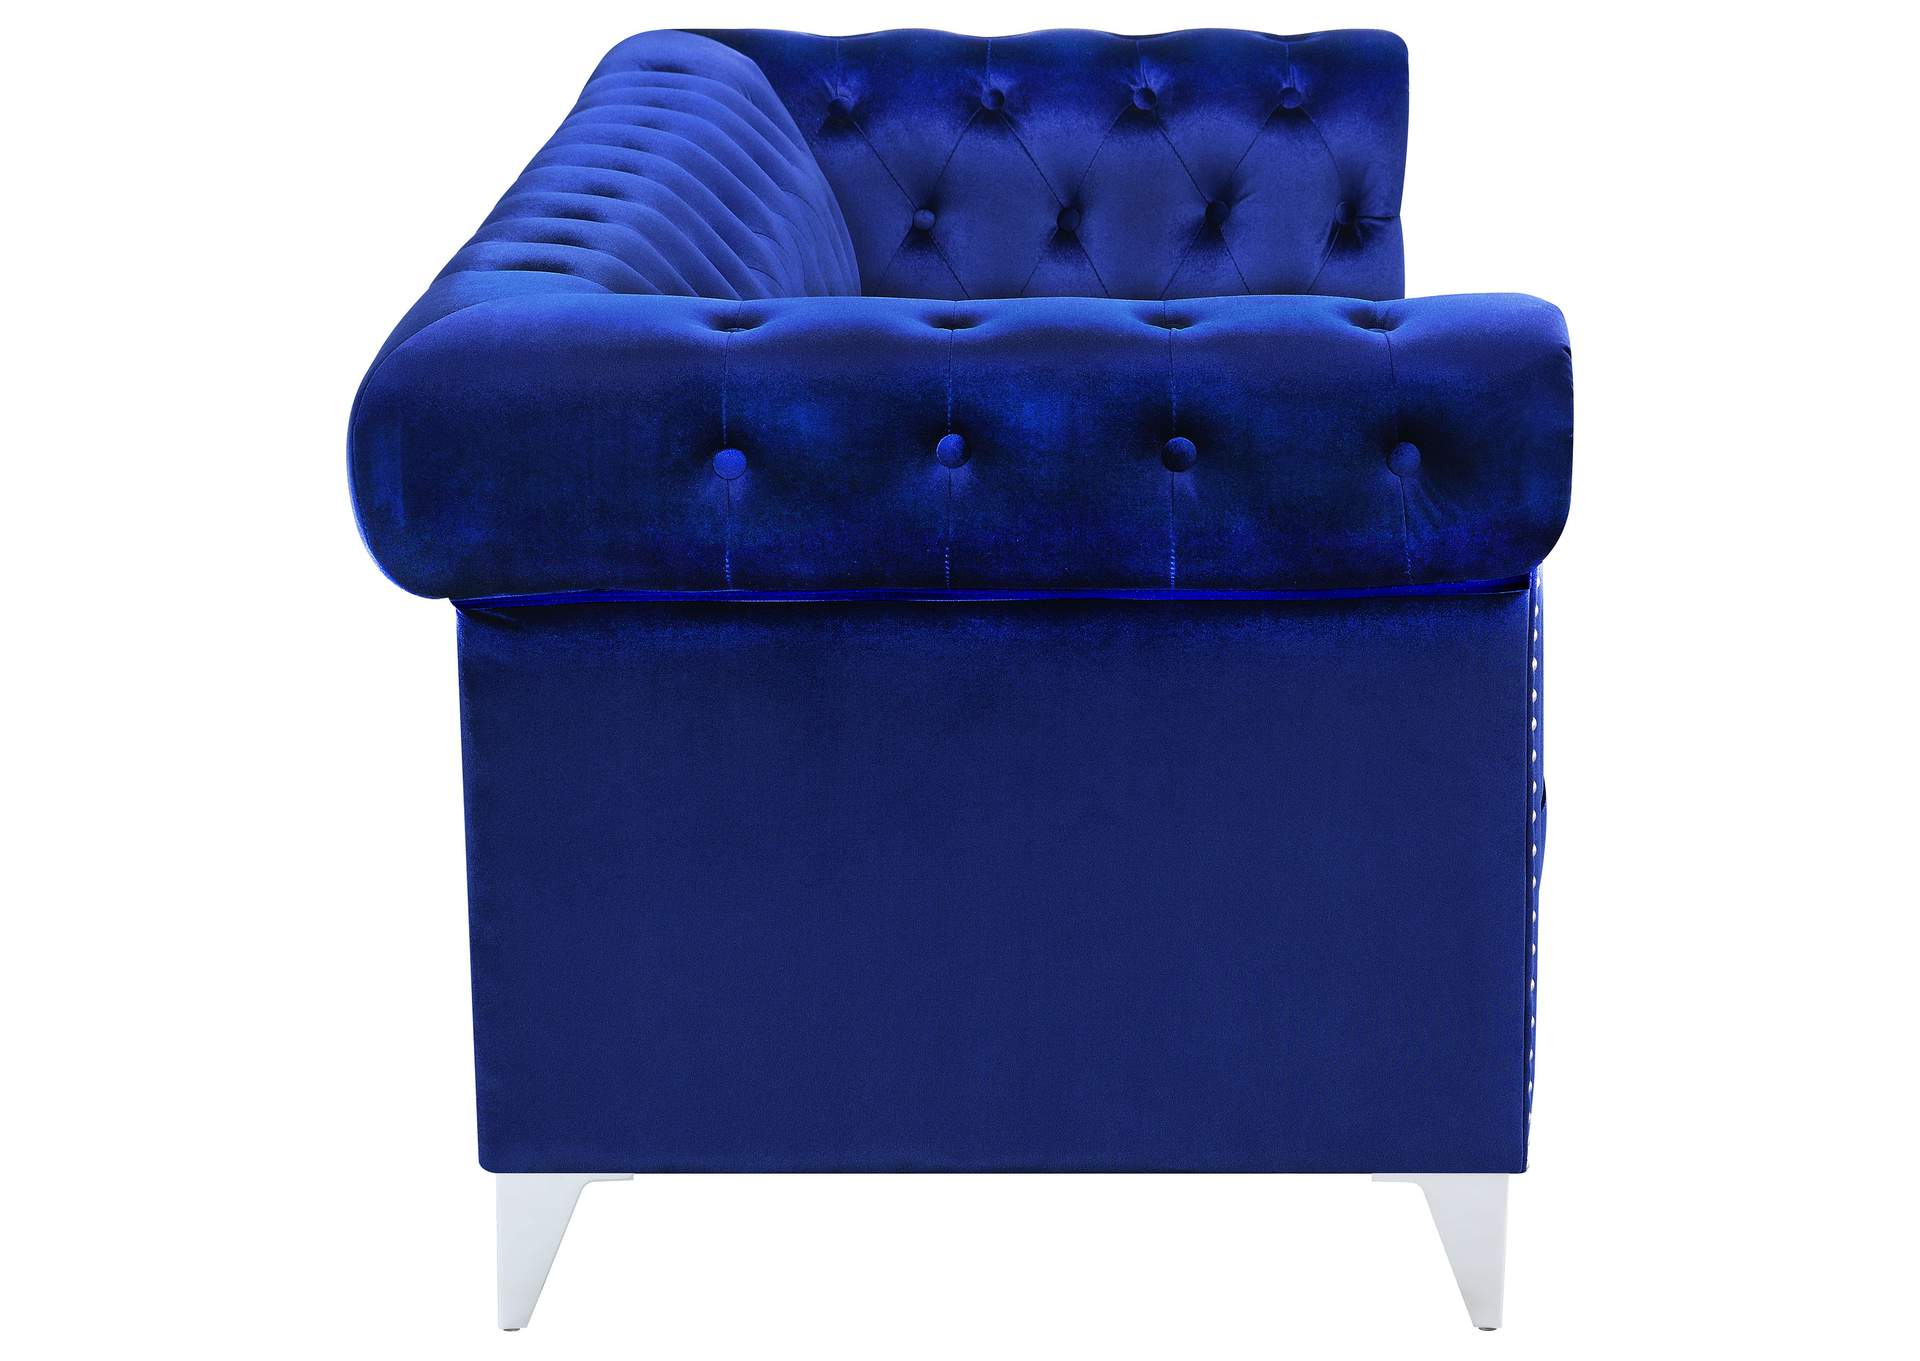 Bleker Tufted Tuxedo Arm Sofa Blue,Coaster Furniture